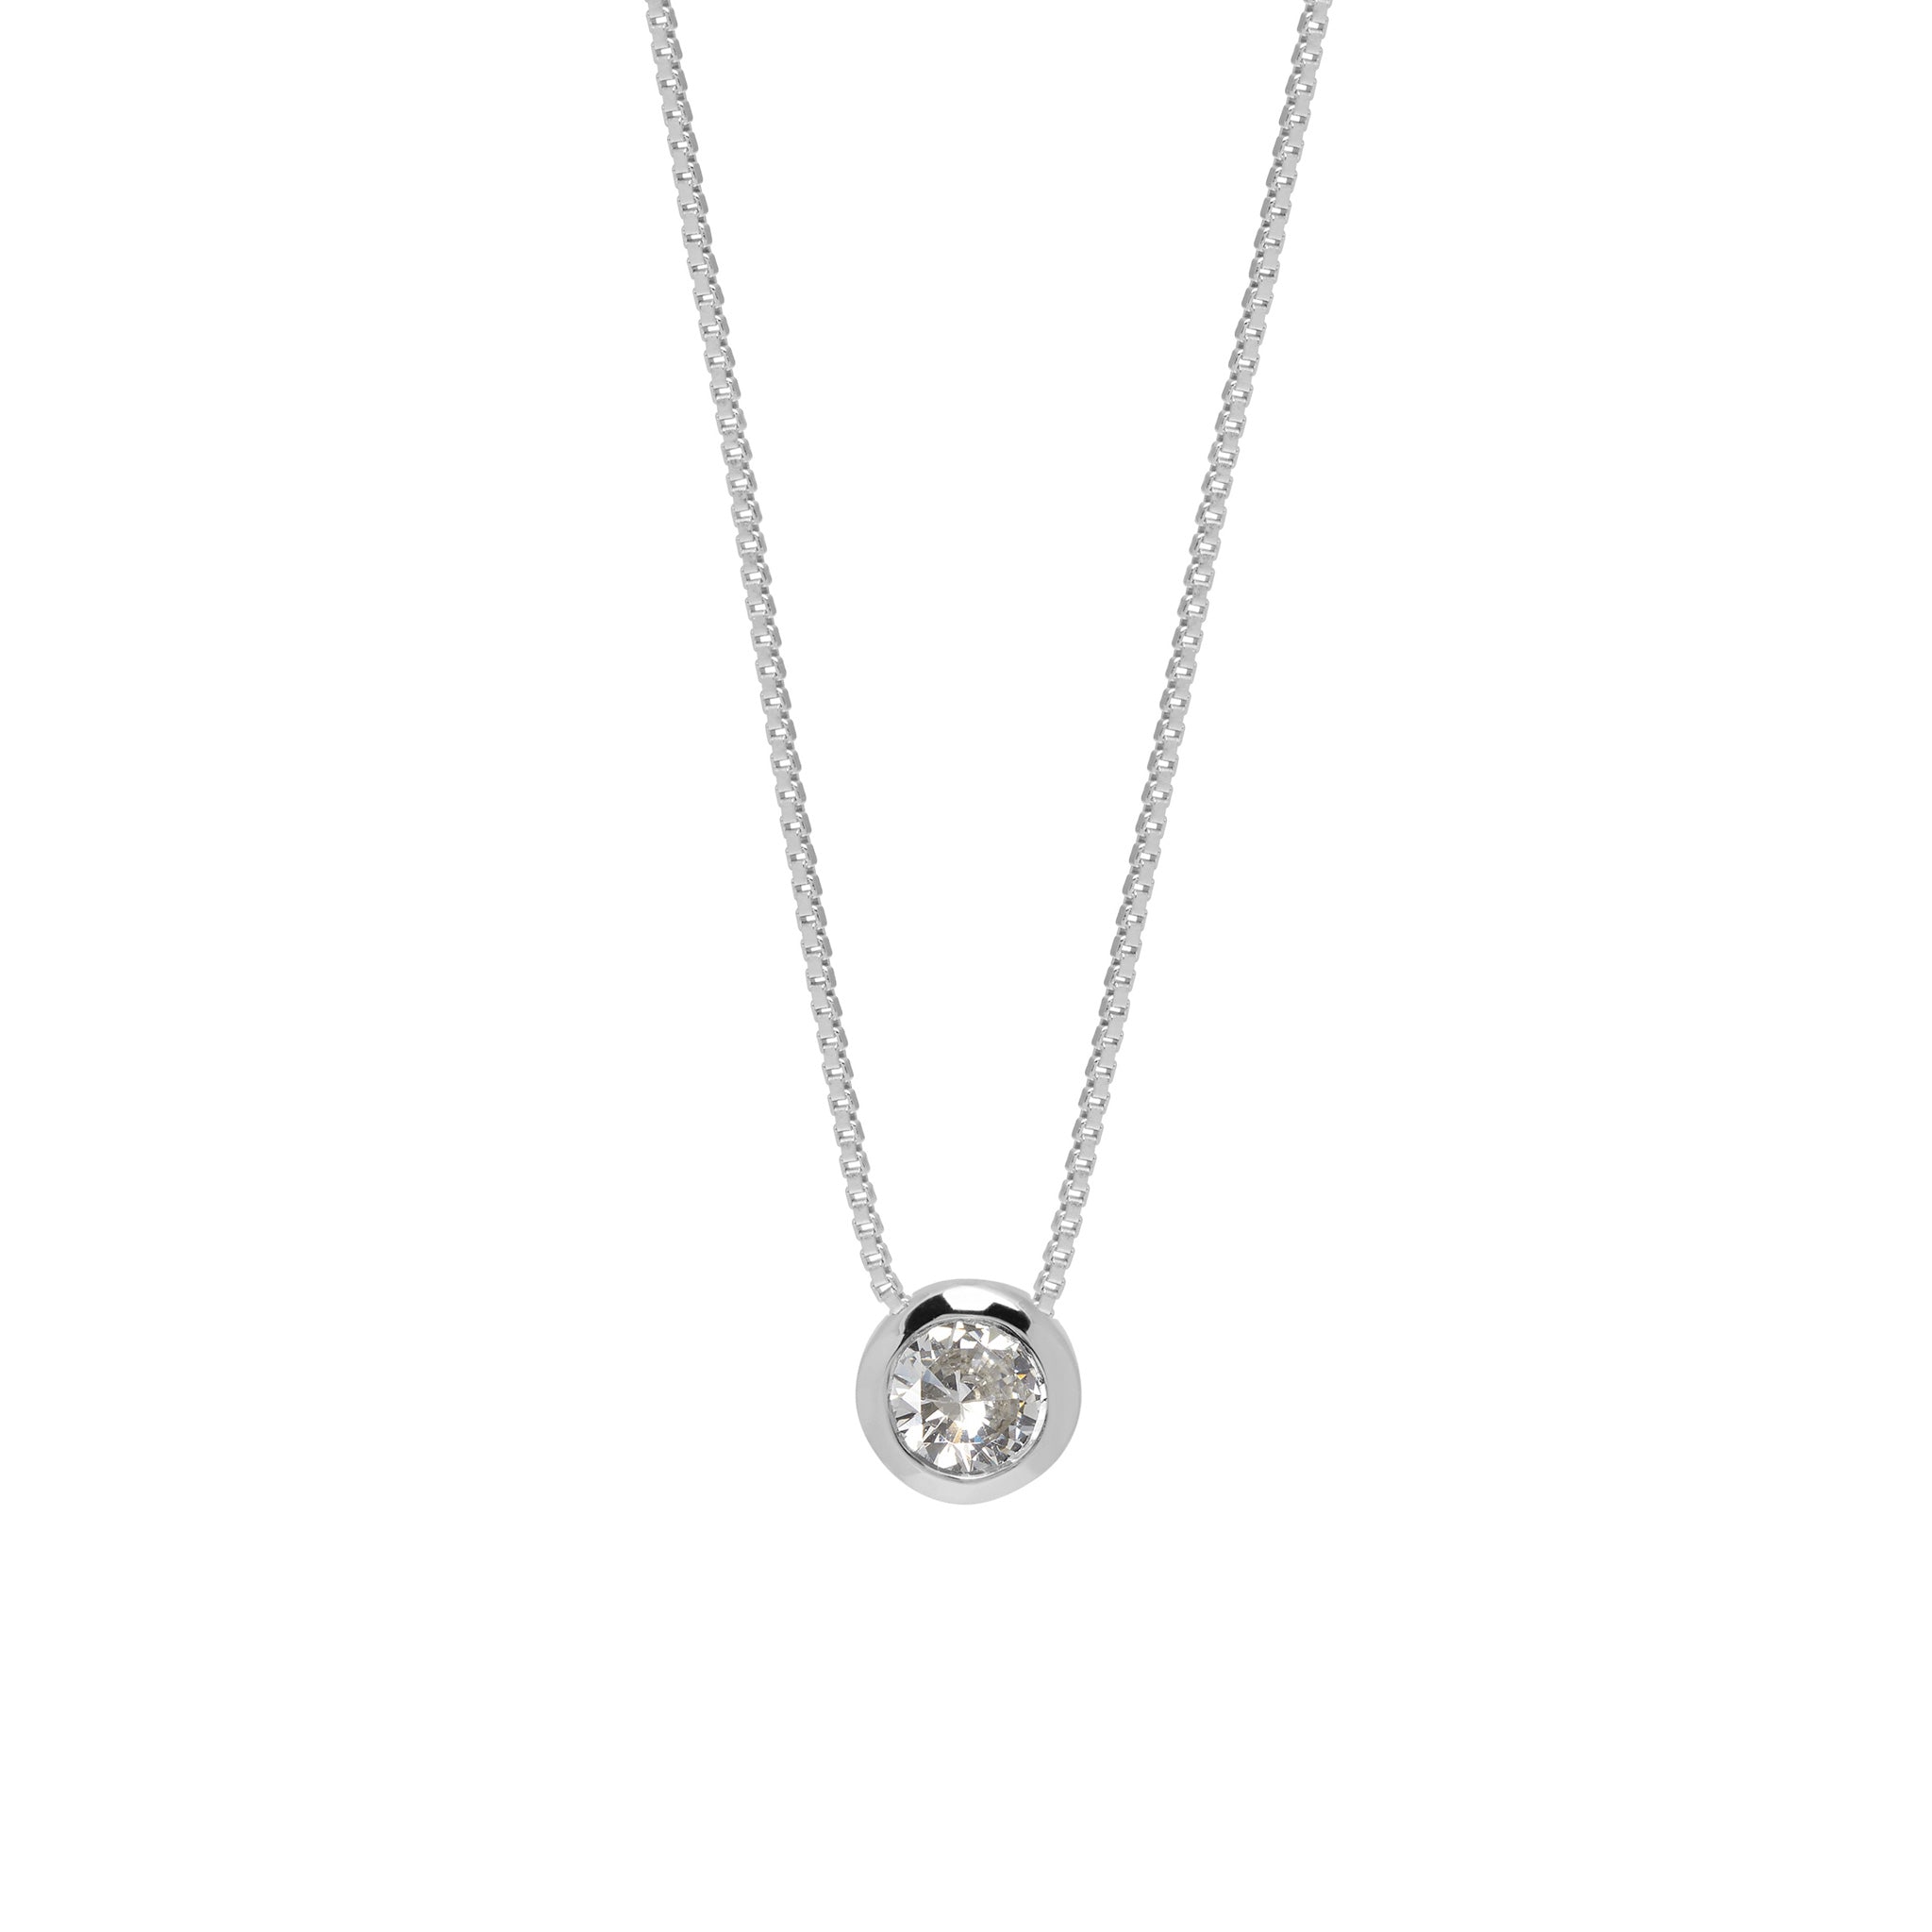 silver sparkly pendant